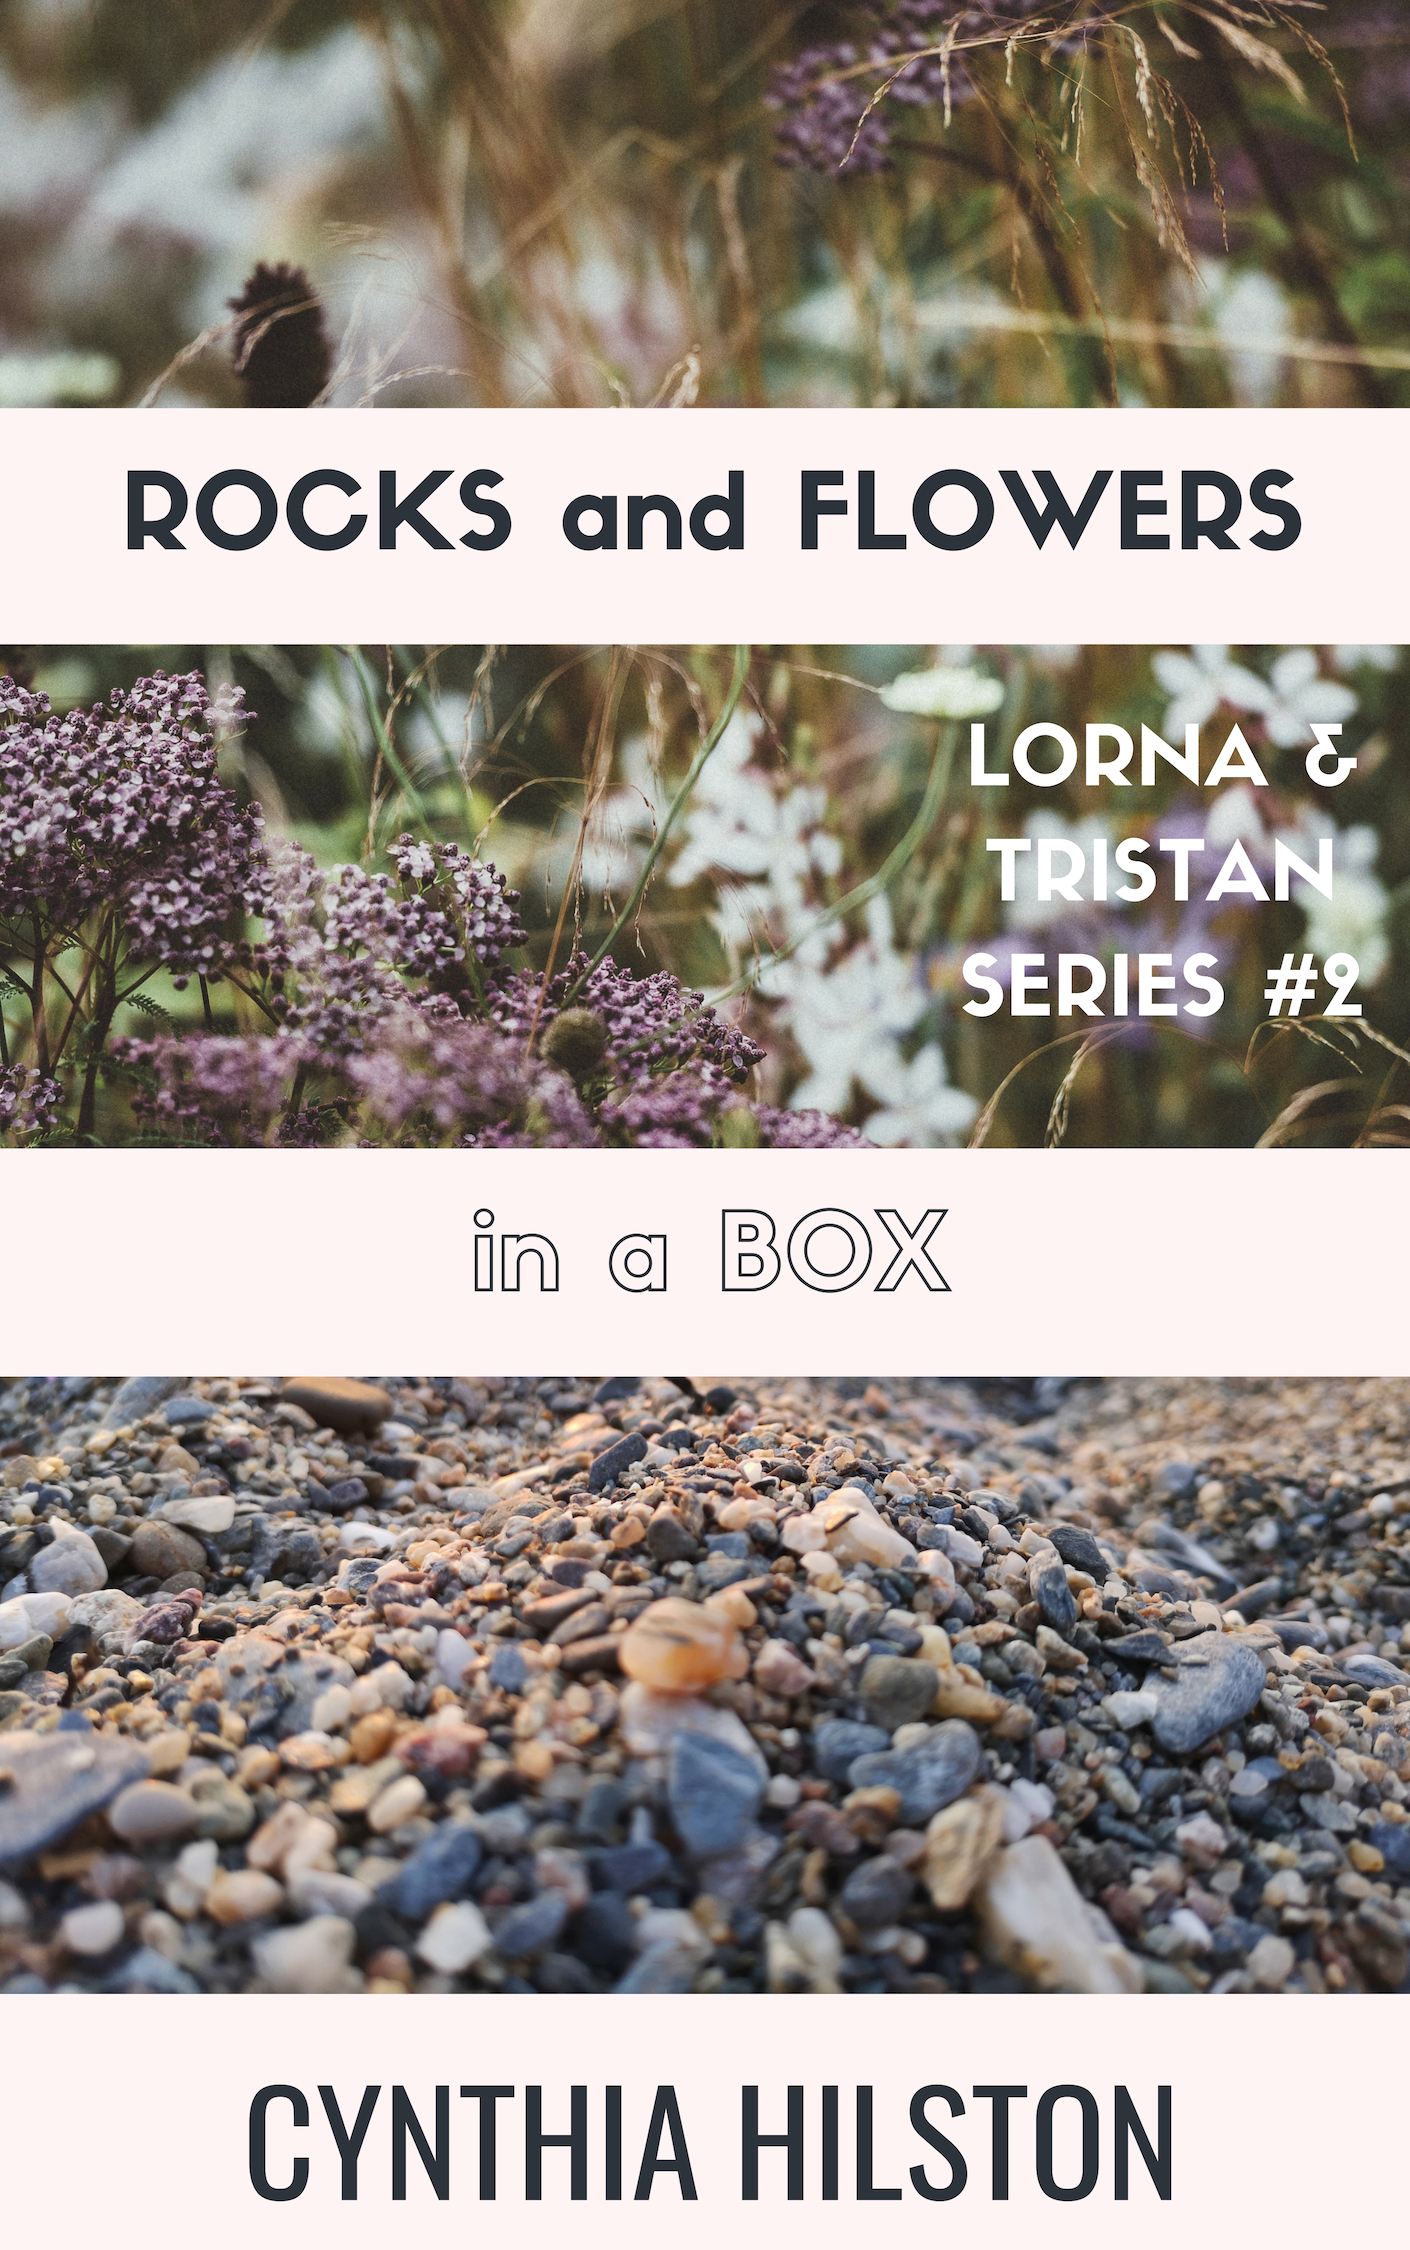 Rocks and Flowers in a Box by Cynthia Hilston #Spotlight #BlogBlitz (@cynthiahilston)  @RaRaResources #RachelsRandomResources #RocksAndFlowersInABox